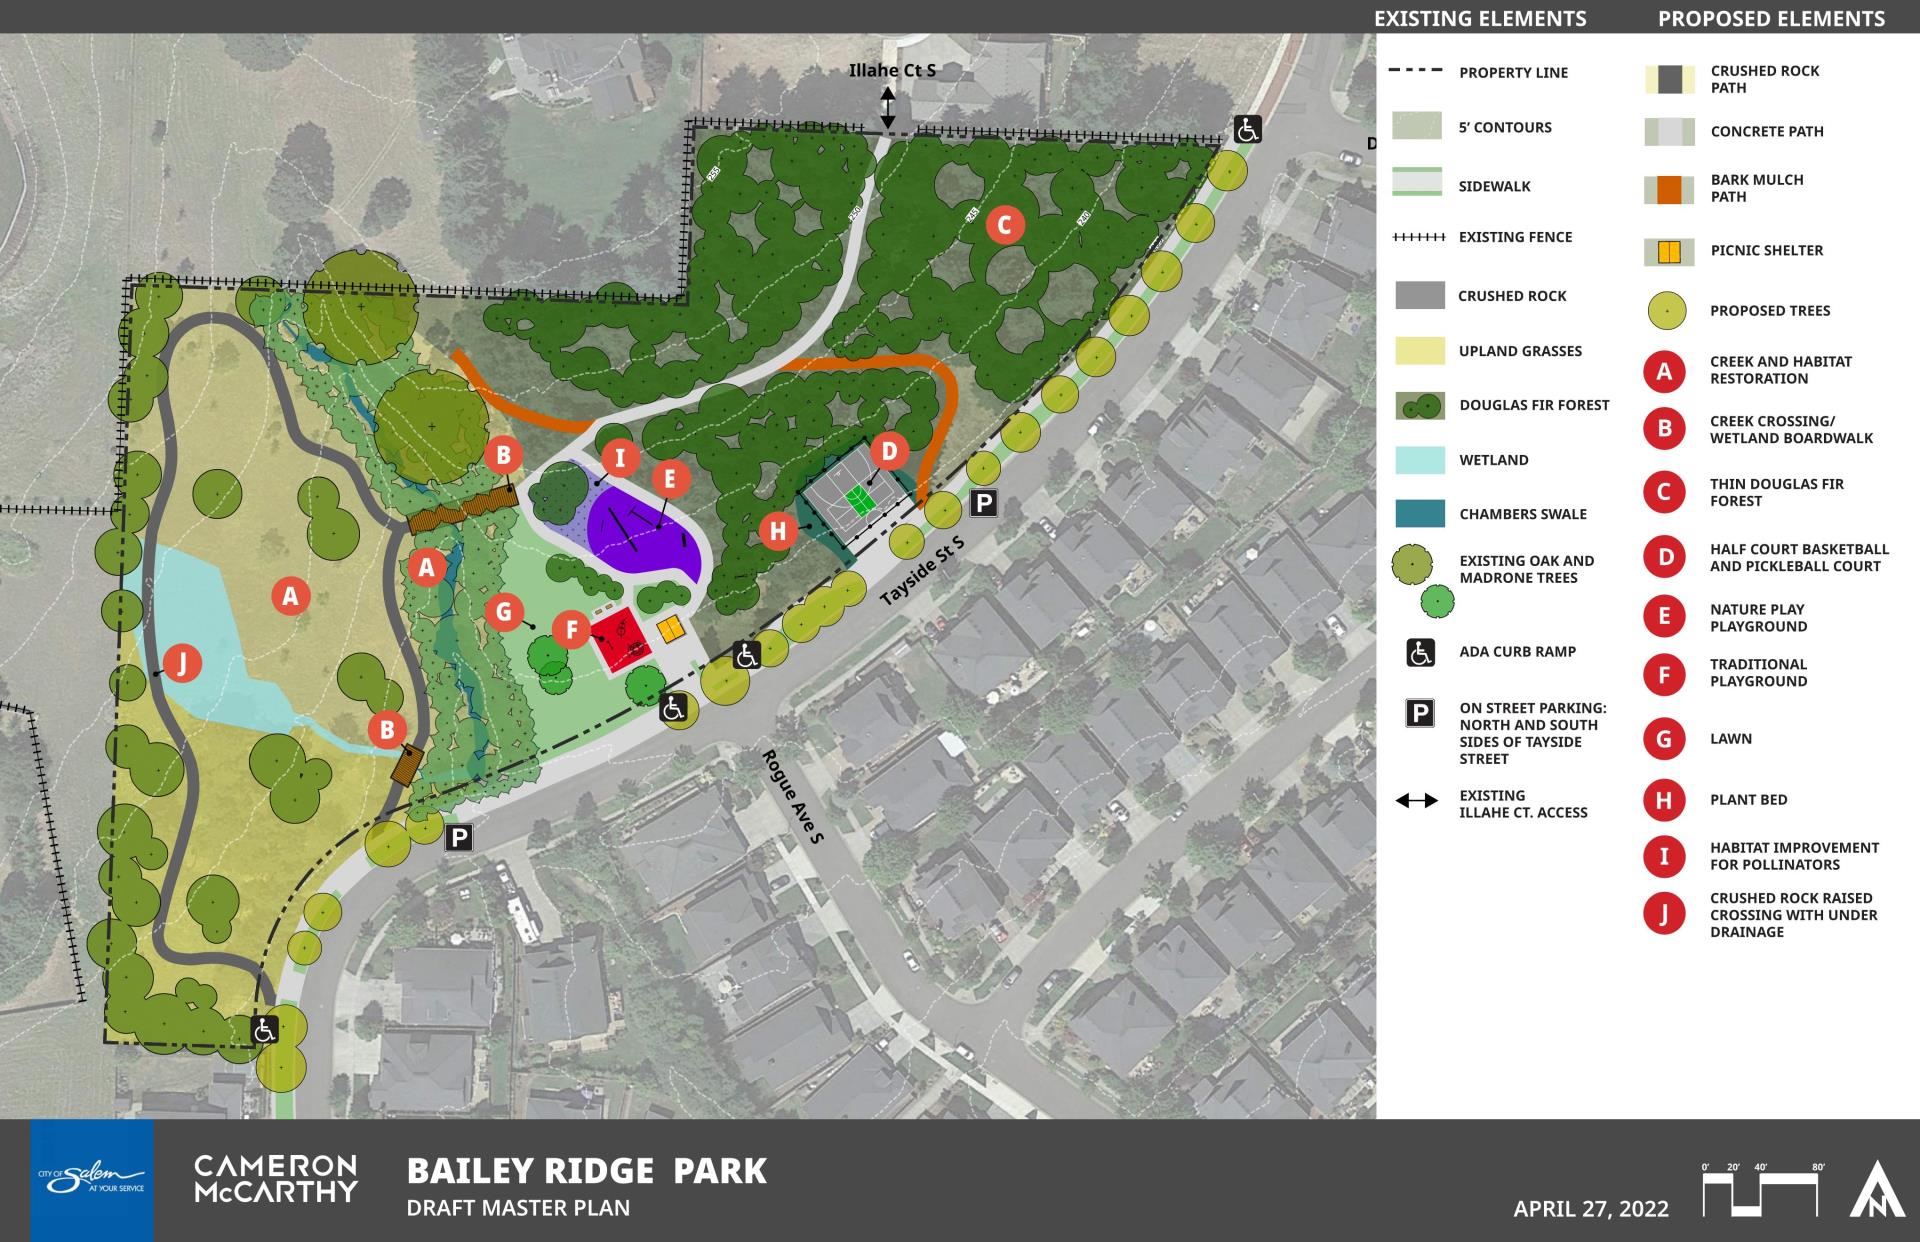 6.2 Bailey Ridge Park Draft Master Plan